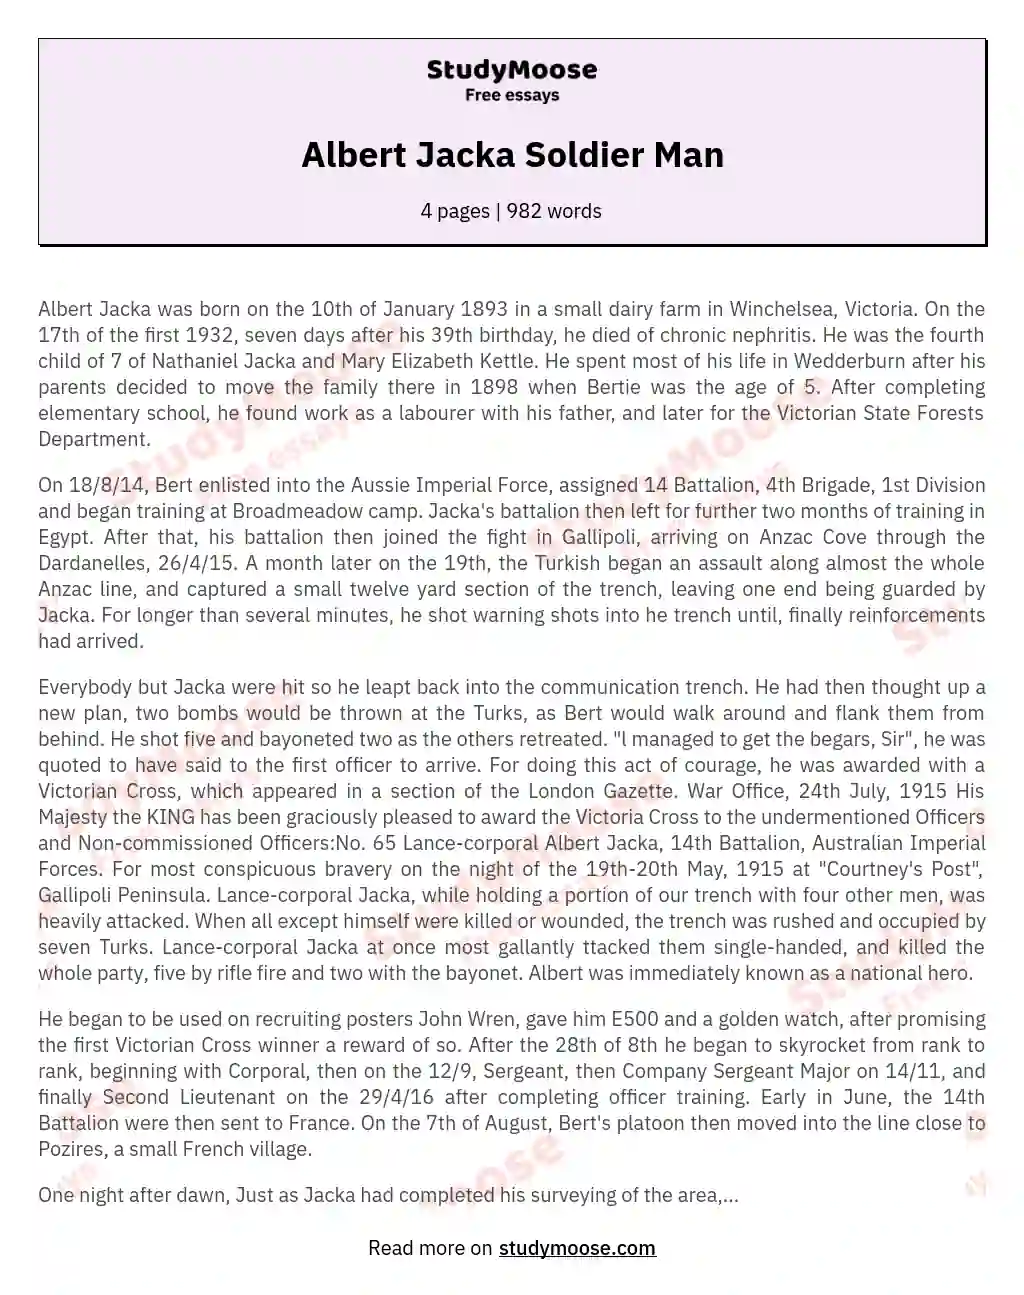 Albert Jacka Soldier Man essay